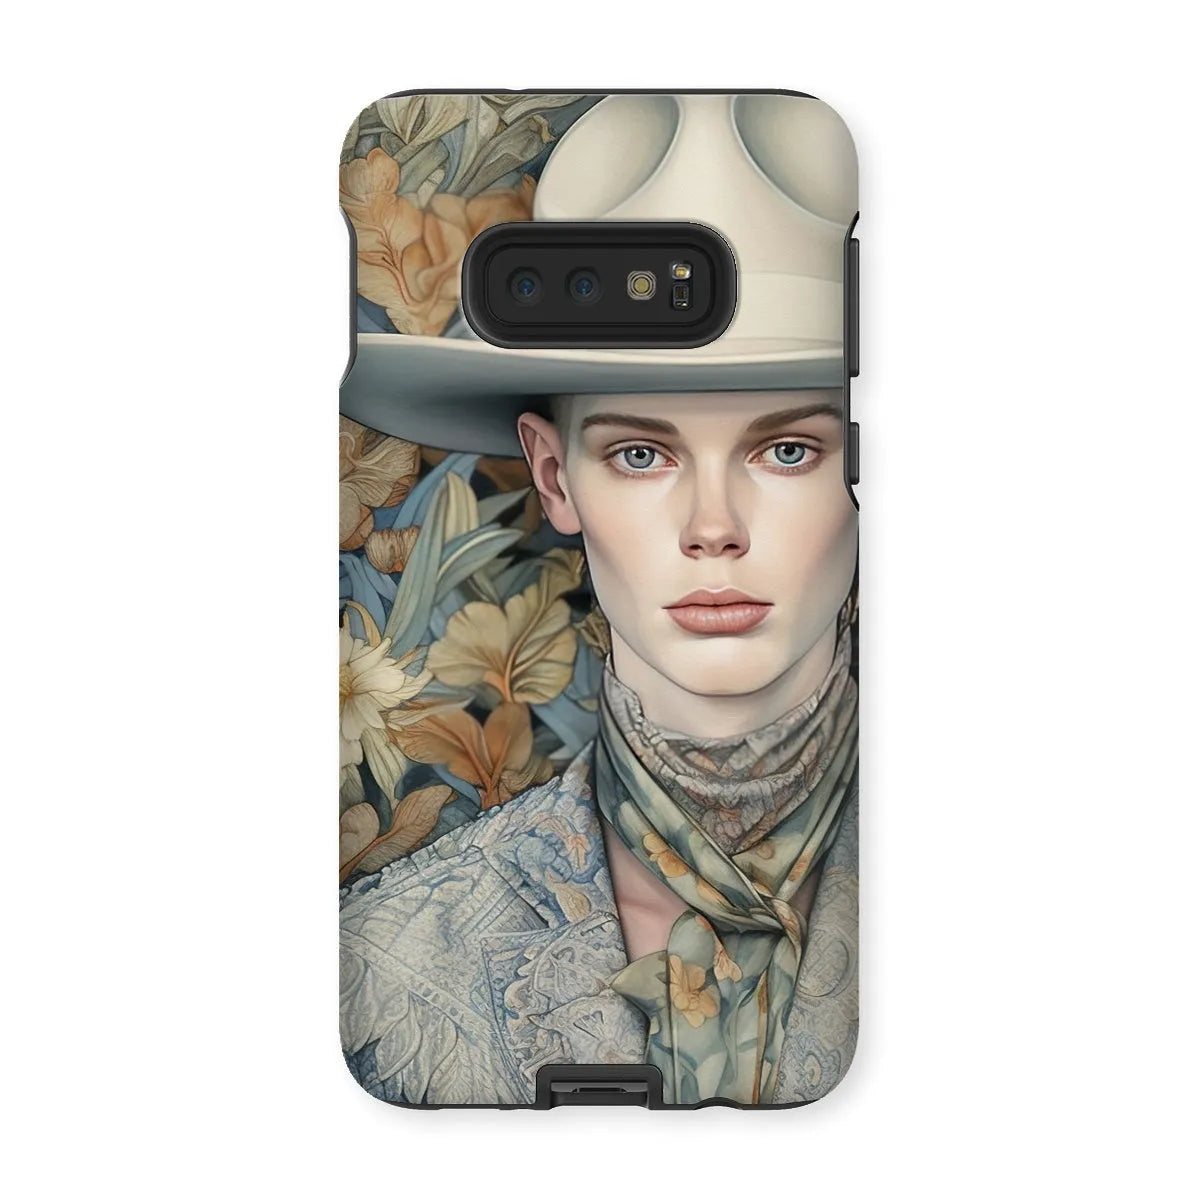 Jasper - Dandy Twink Cowboy Aesthetic Art Phone Case - Samsung Galaxy S10e / Matte - Mobile Phone Cases - Aesthetic Art